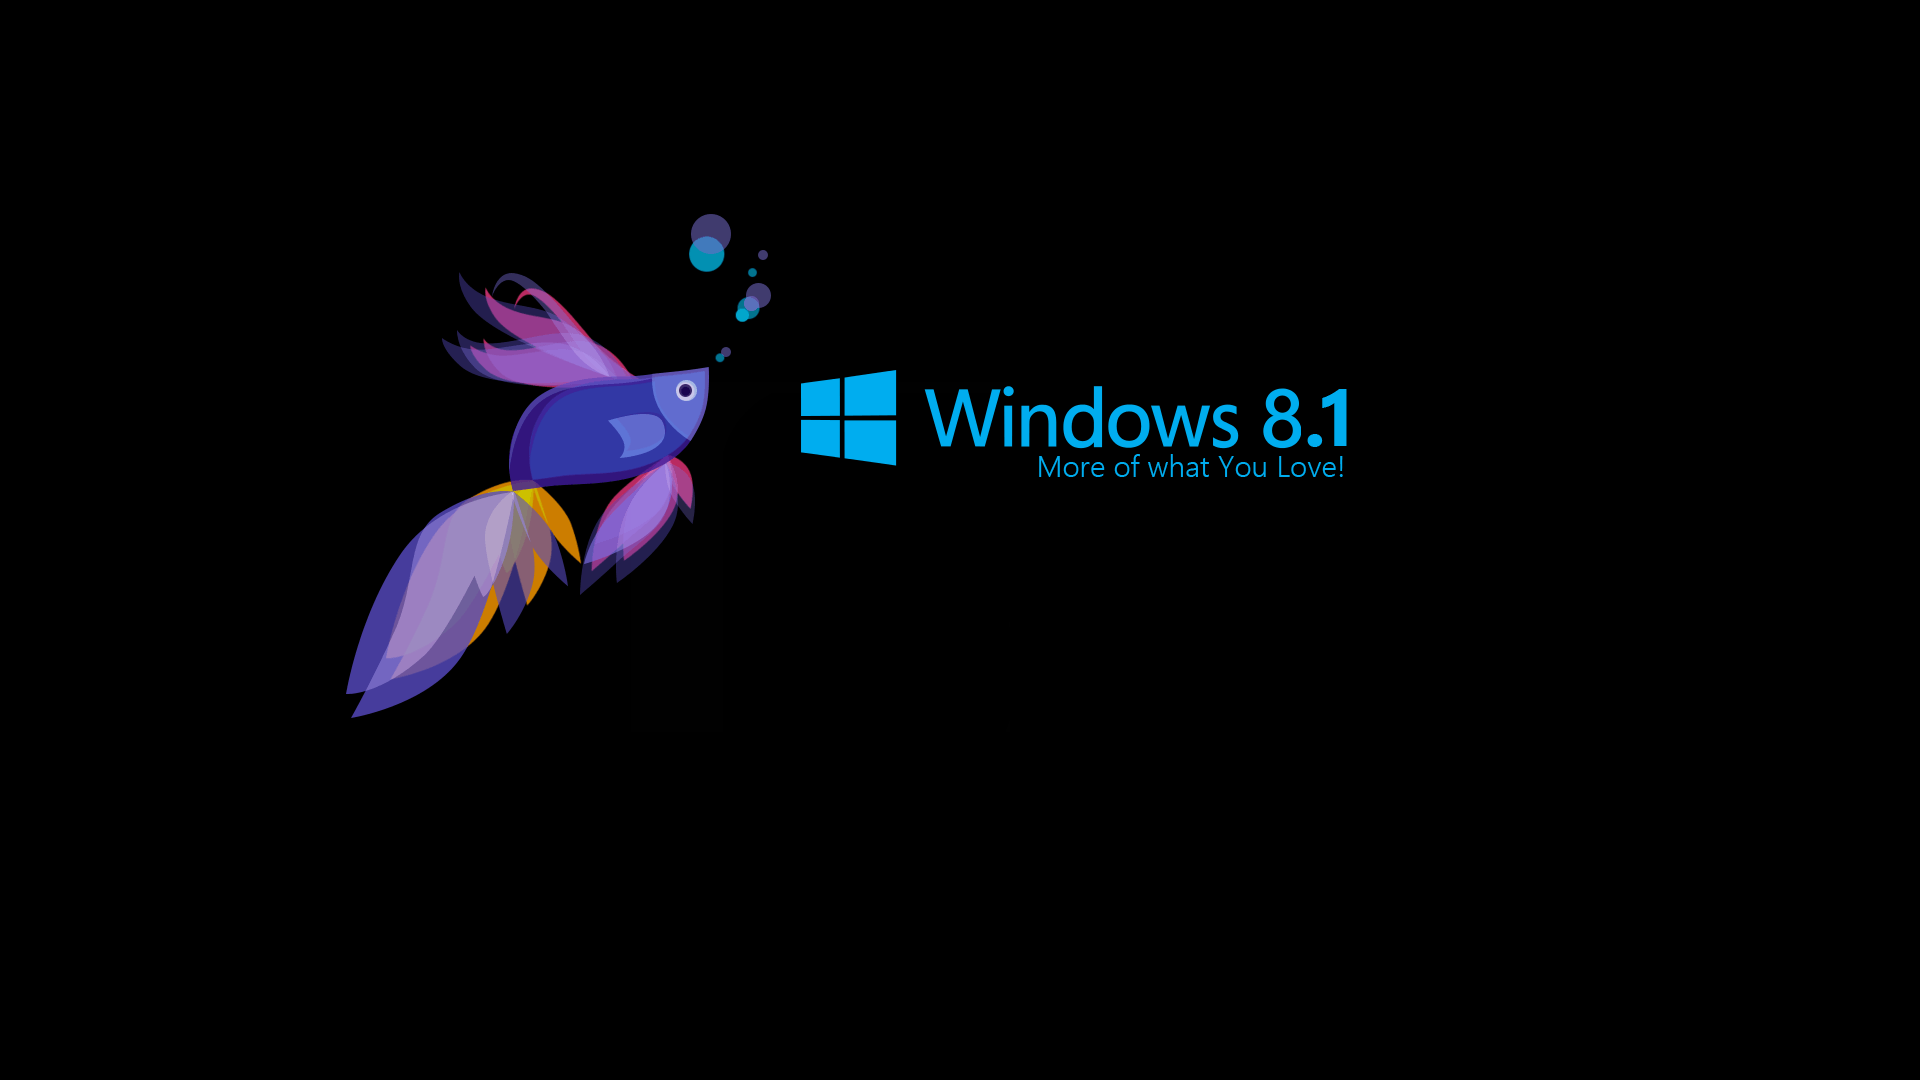 HD Wallpaper Windows 8.1